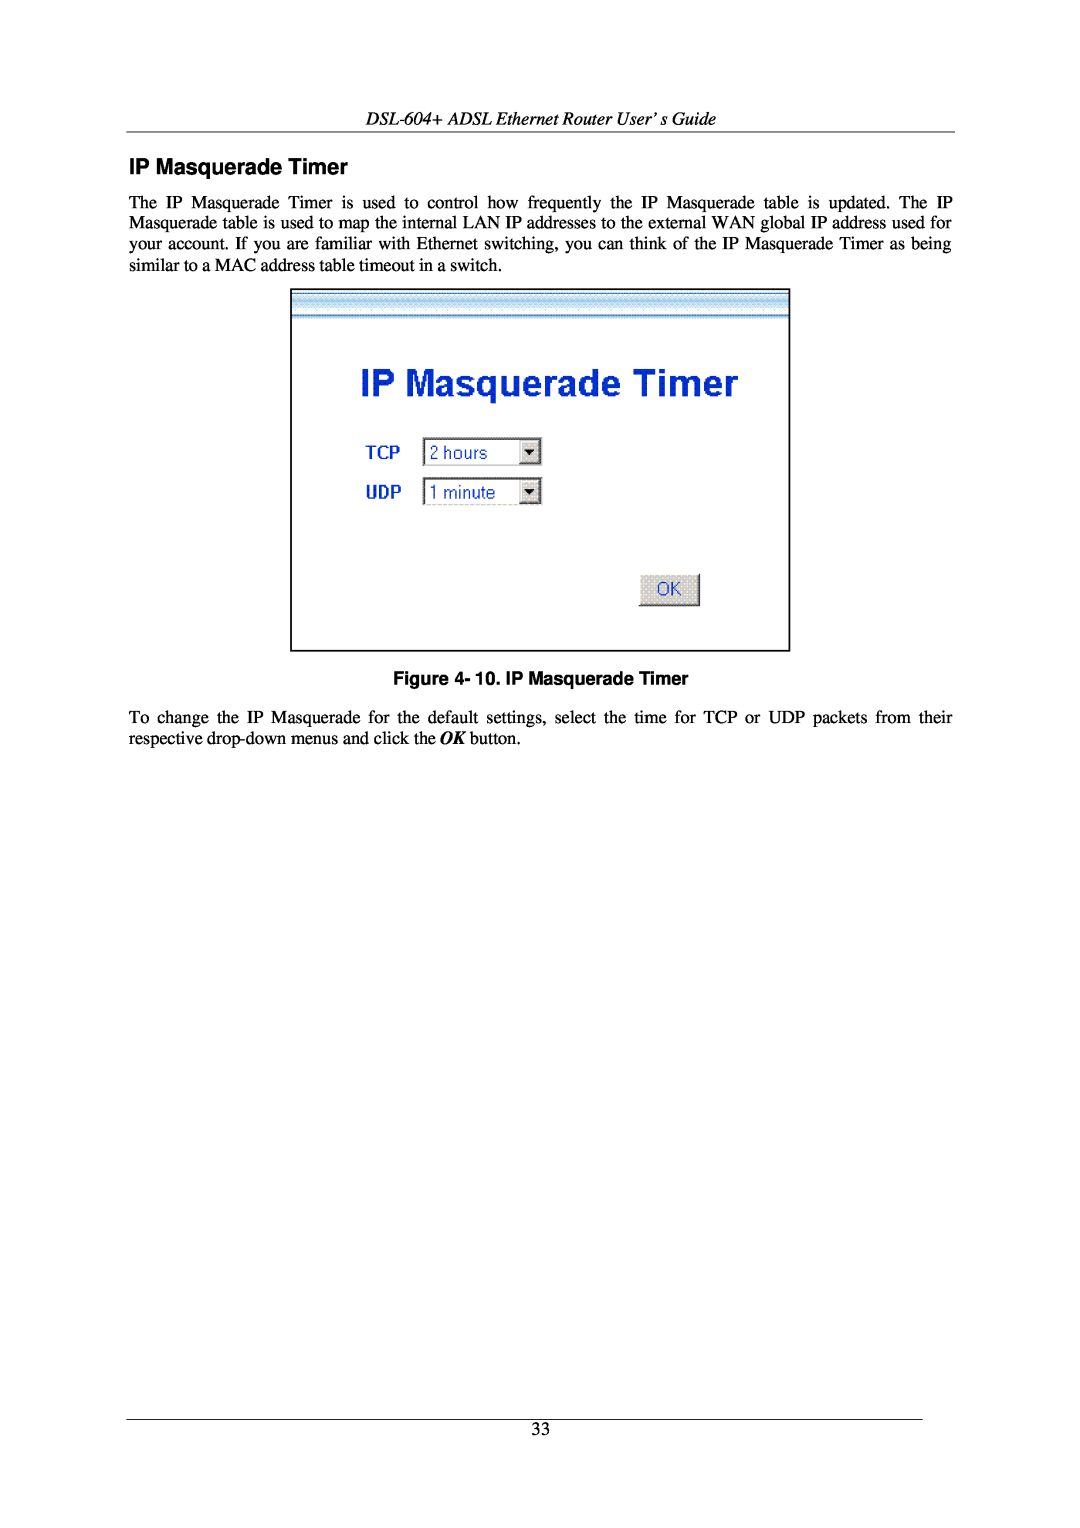 D-Link manual DSL-604+ ADSL Ethernet Router User’s Guide, 10. IP Masquerade Timer 